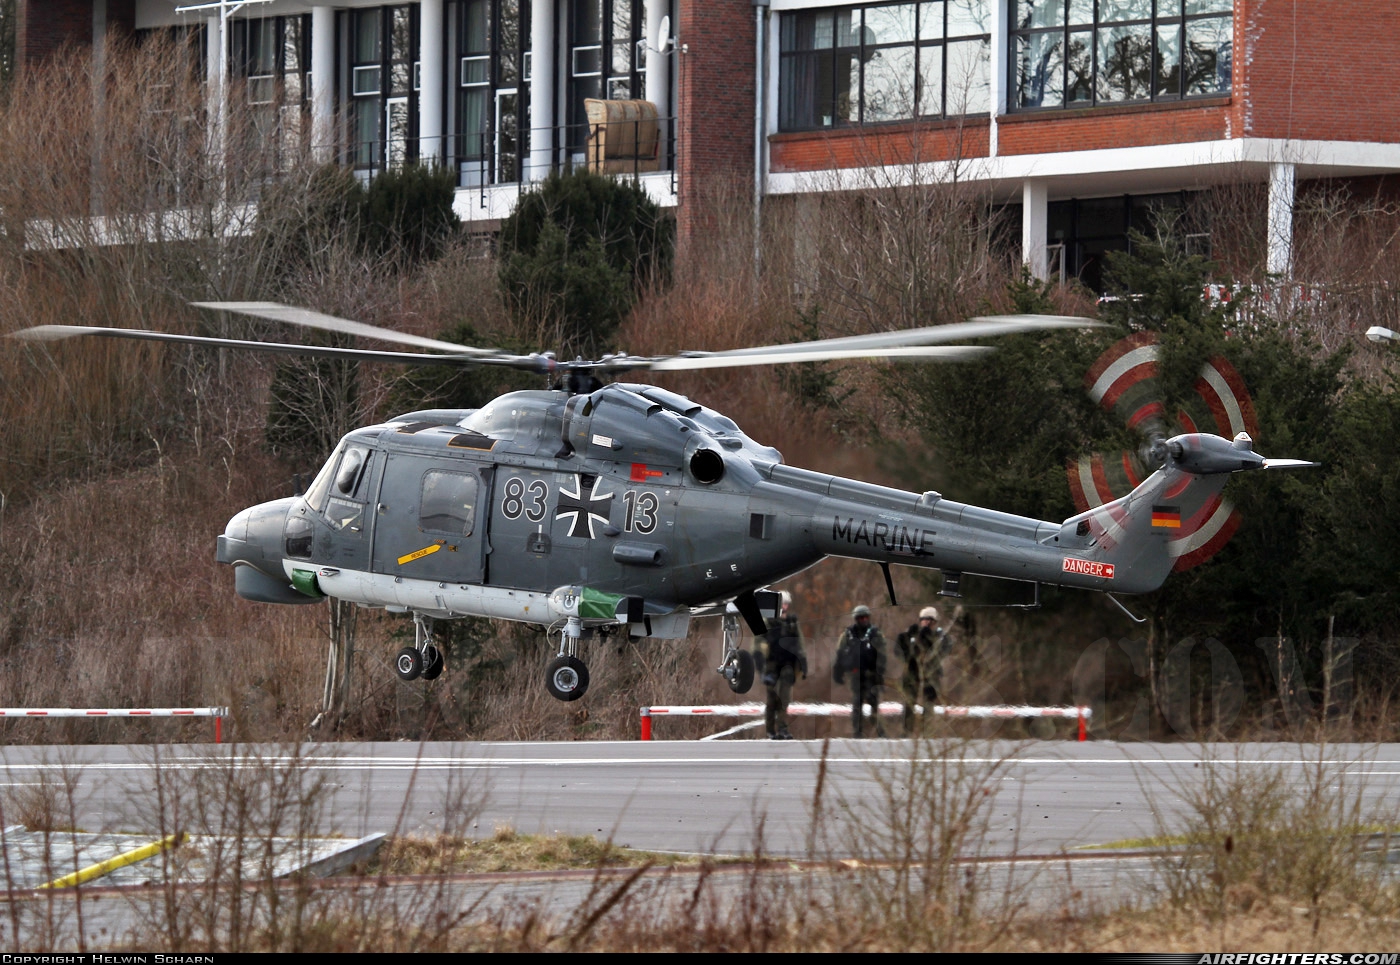 Germany - Navy Westland WG-13 Super Lynx Mk88A 83+13 at Eckernfoerde Naval Station, Germany